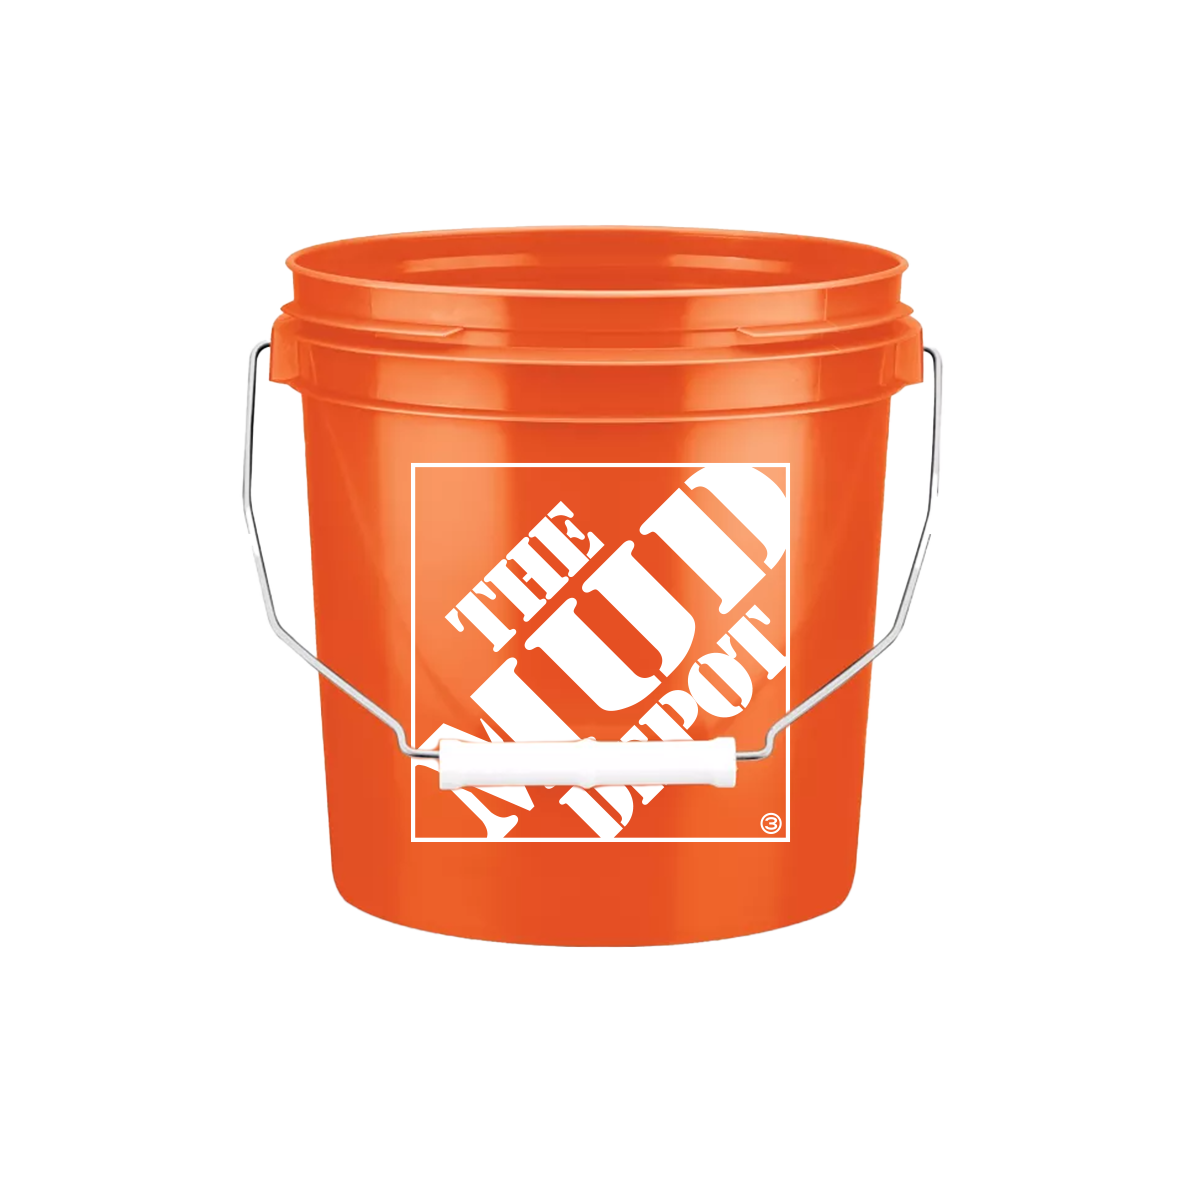 Mud Depot Bucket - Orange